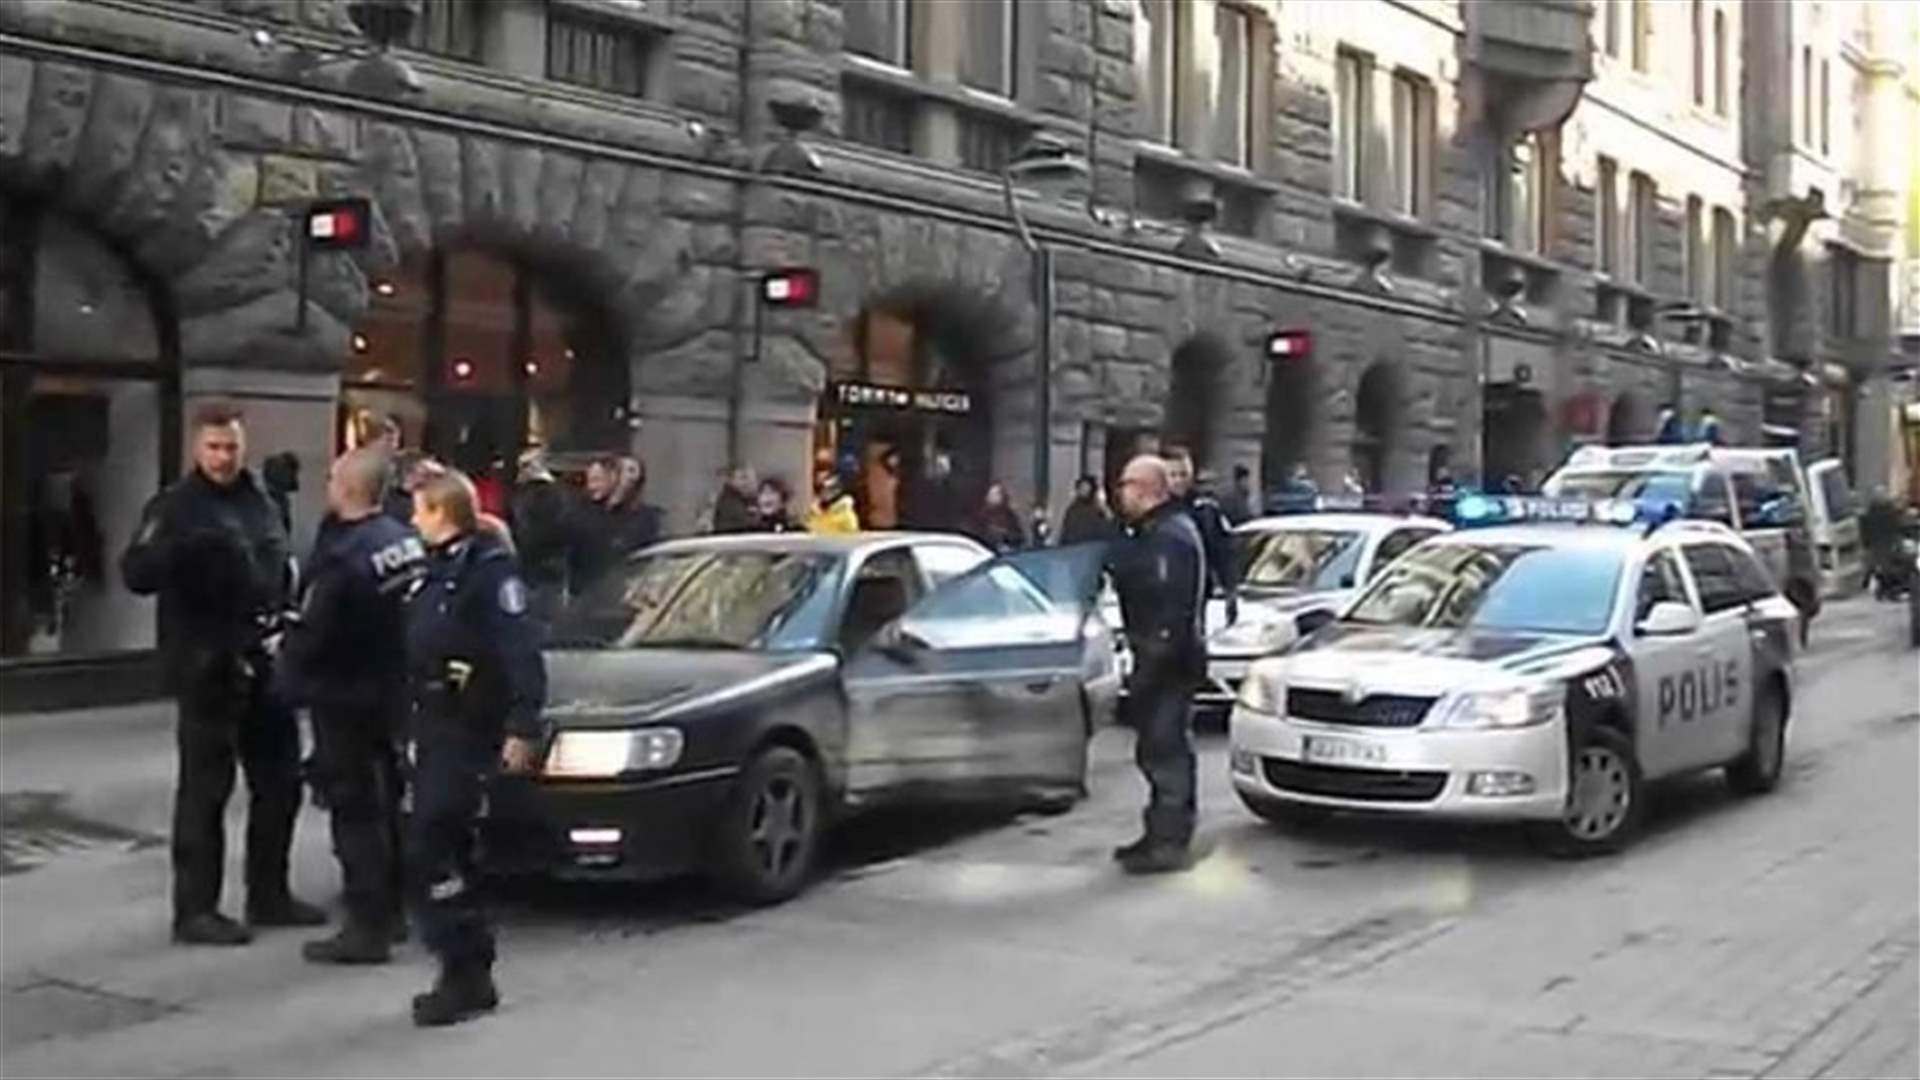 Man drives vehicle into crowd in Helsinki, one dead - police